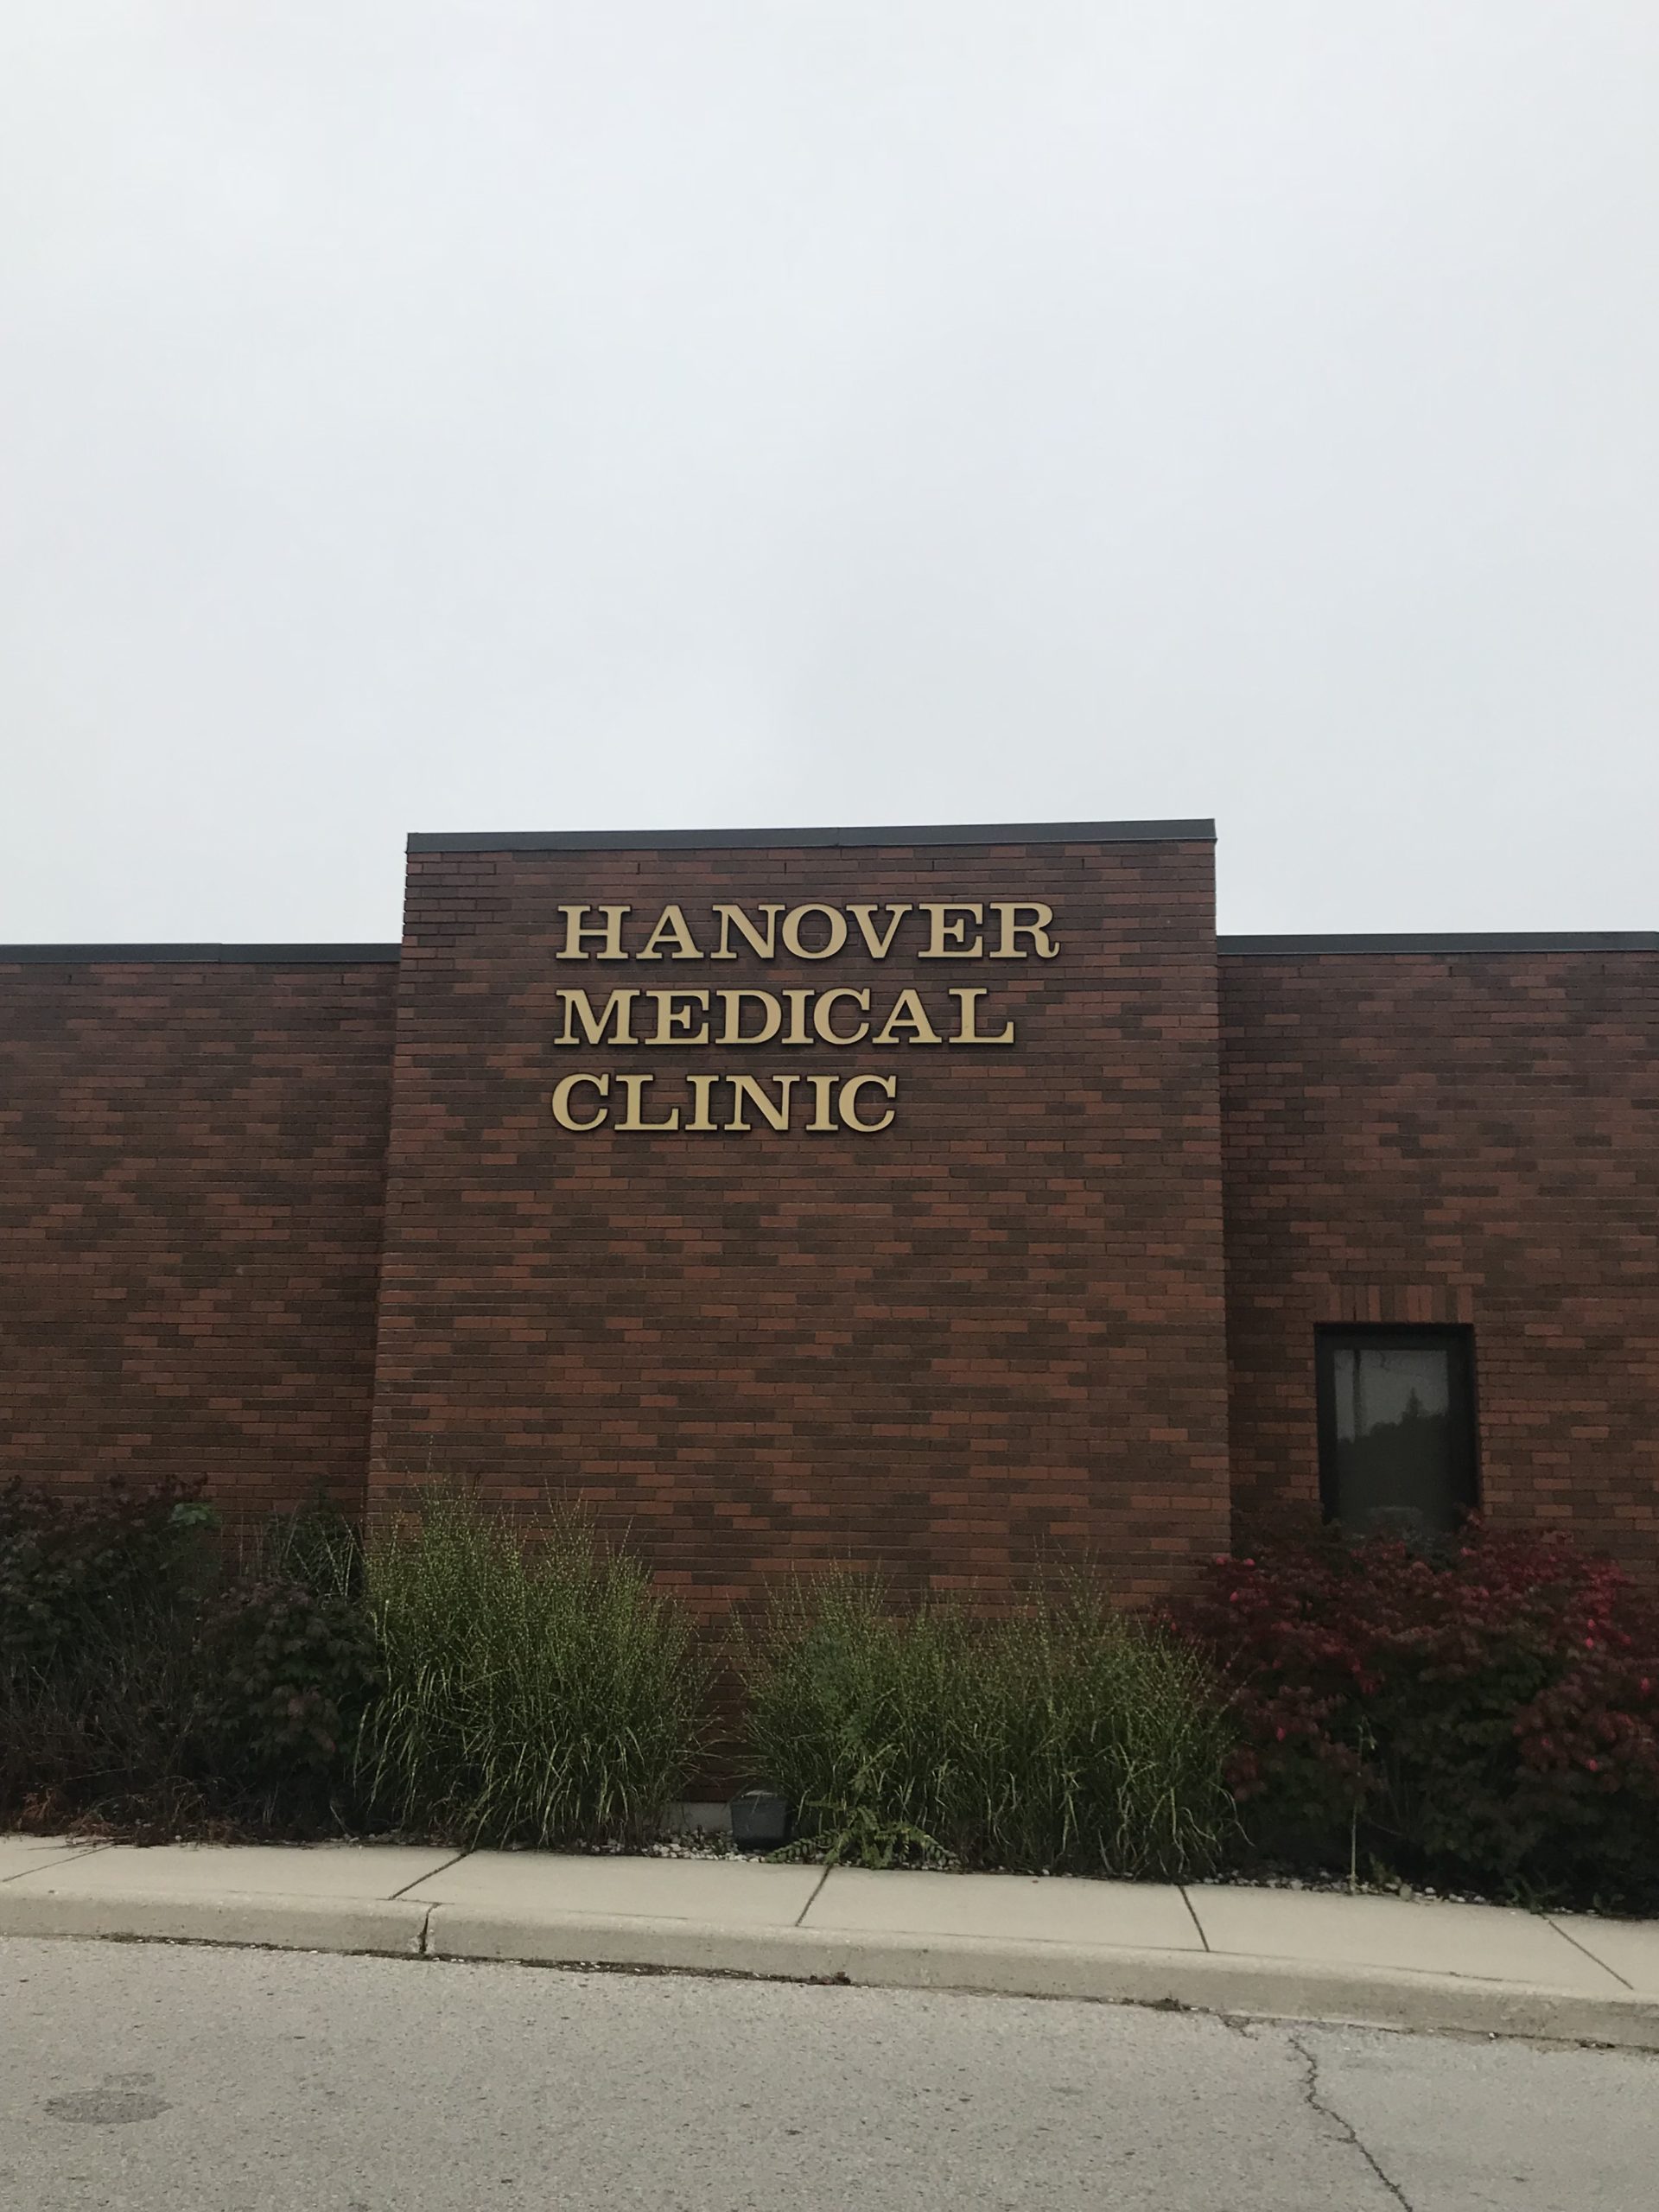 Hanover hospital facing unprecedented pressure